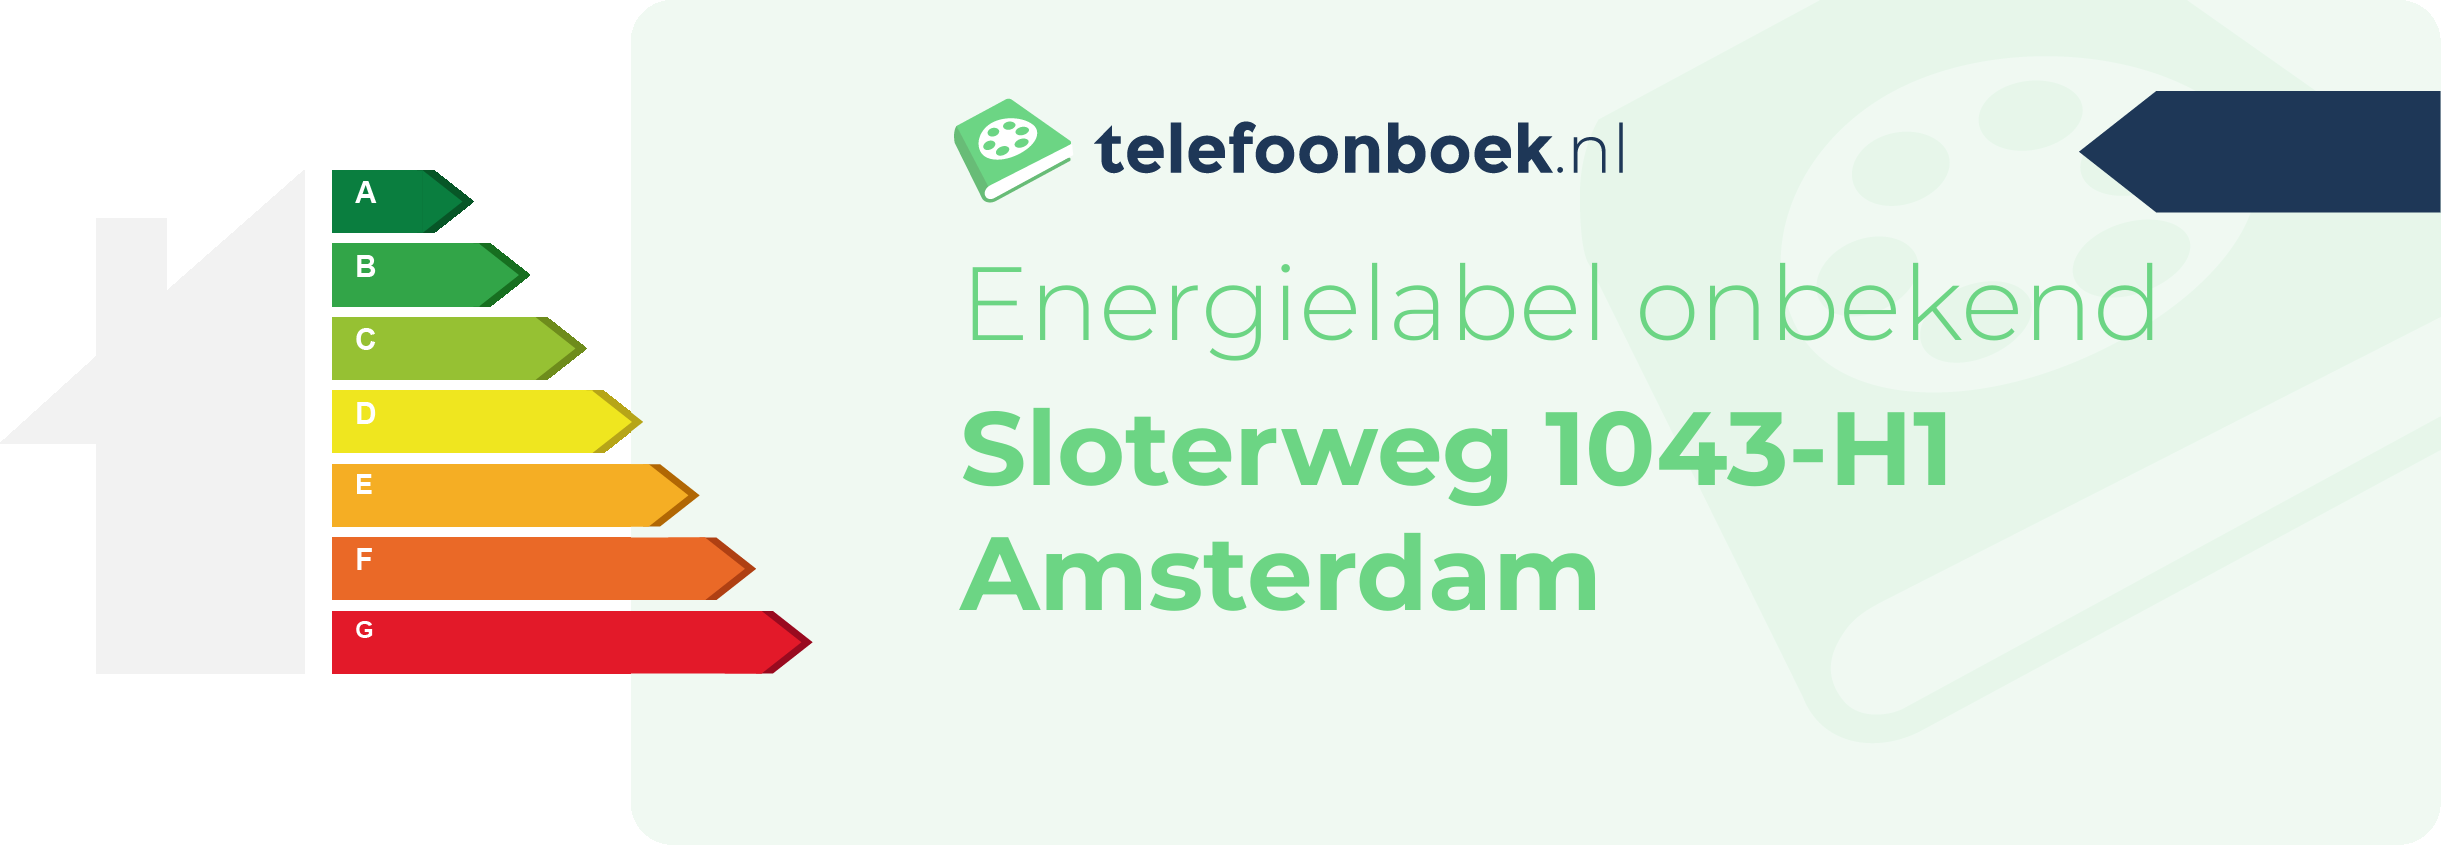 Energielabel Sloterweg 1043-H1 Amsterdam